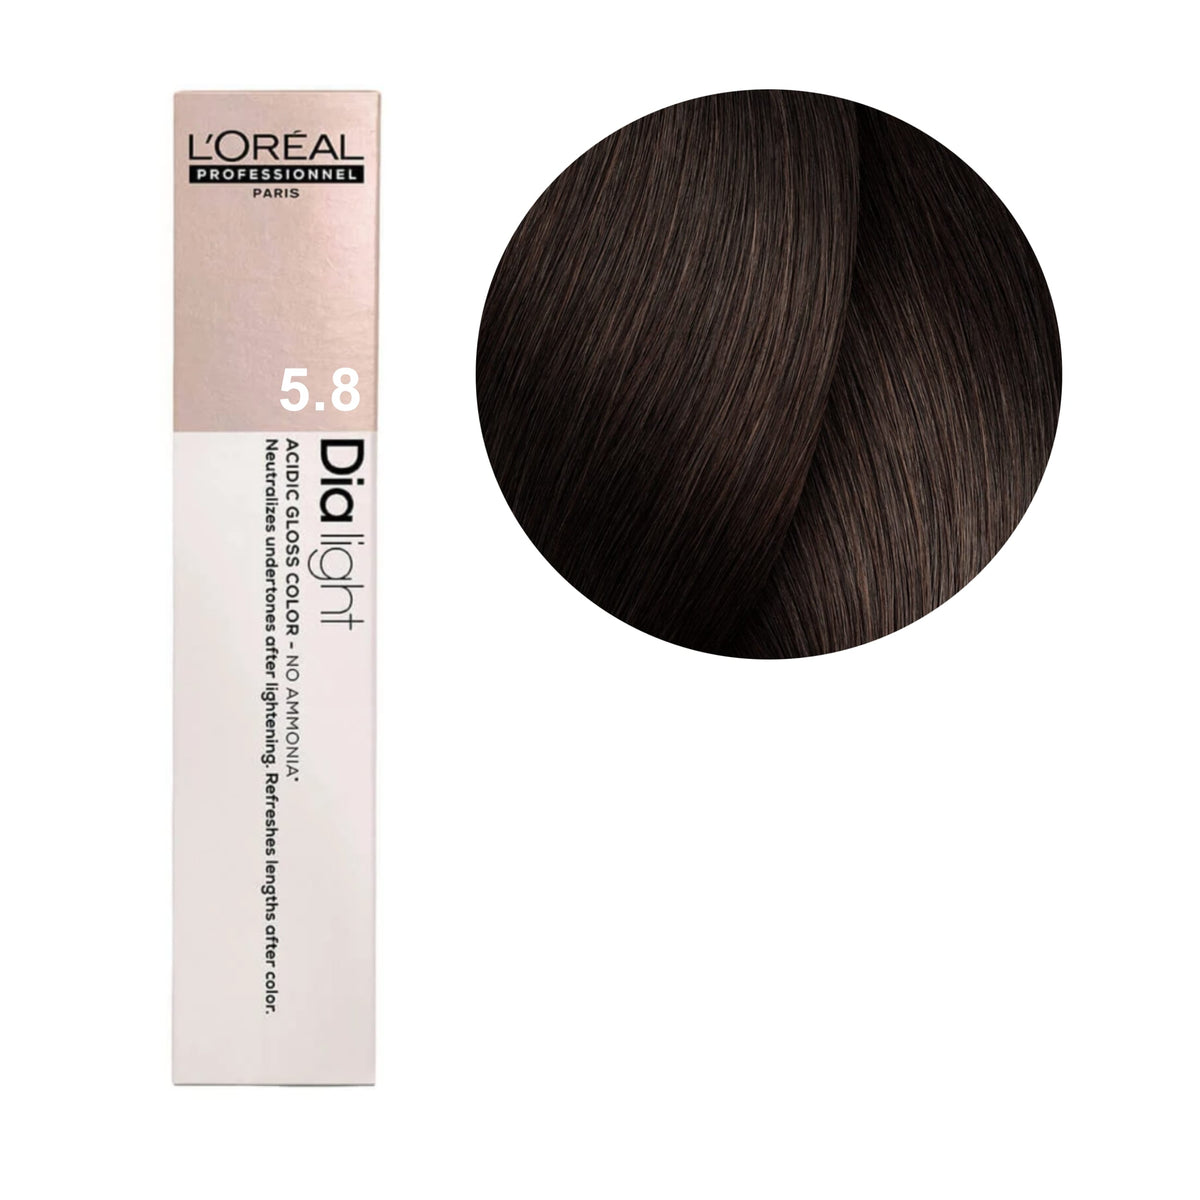 a box of loreal hair color in dark brown